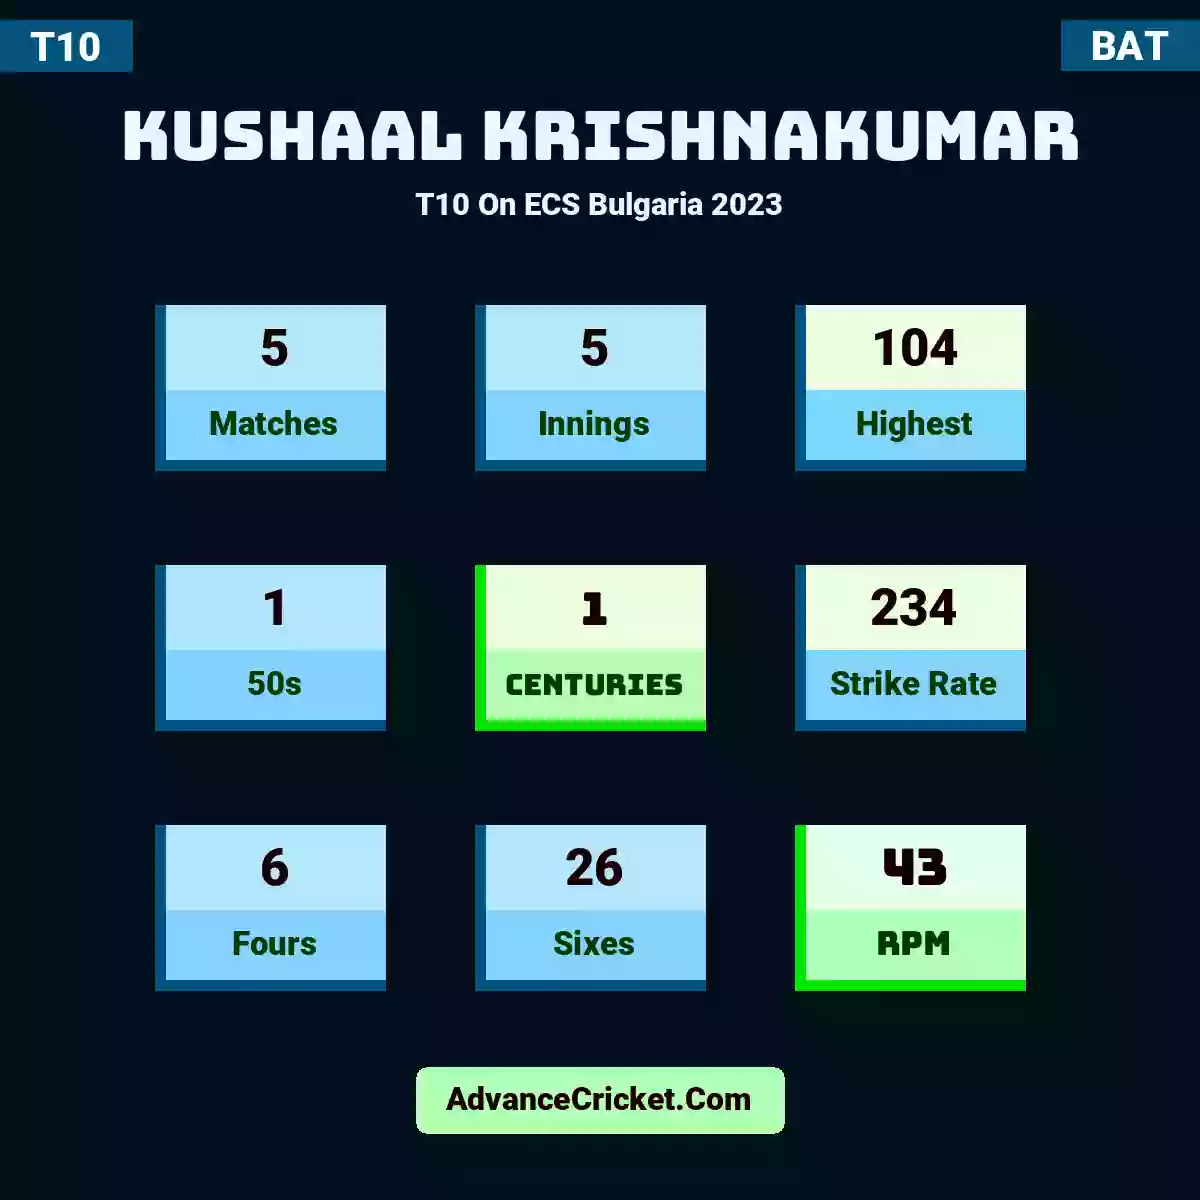 Kushaal Krishnakumar T10  On ECS Bulgaria 2023, Kushaal Krishnakumar played 5 matches, scored 104 runs as highest, 1 half-centuries, and 1 centuries, with a strike rate of 234. K.Krishnakumar hit 6 fours and 26 sixes, with an RPM of 43.